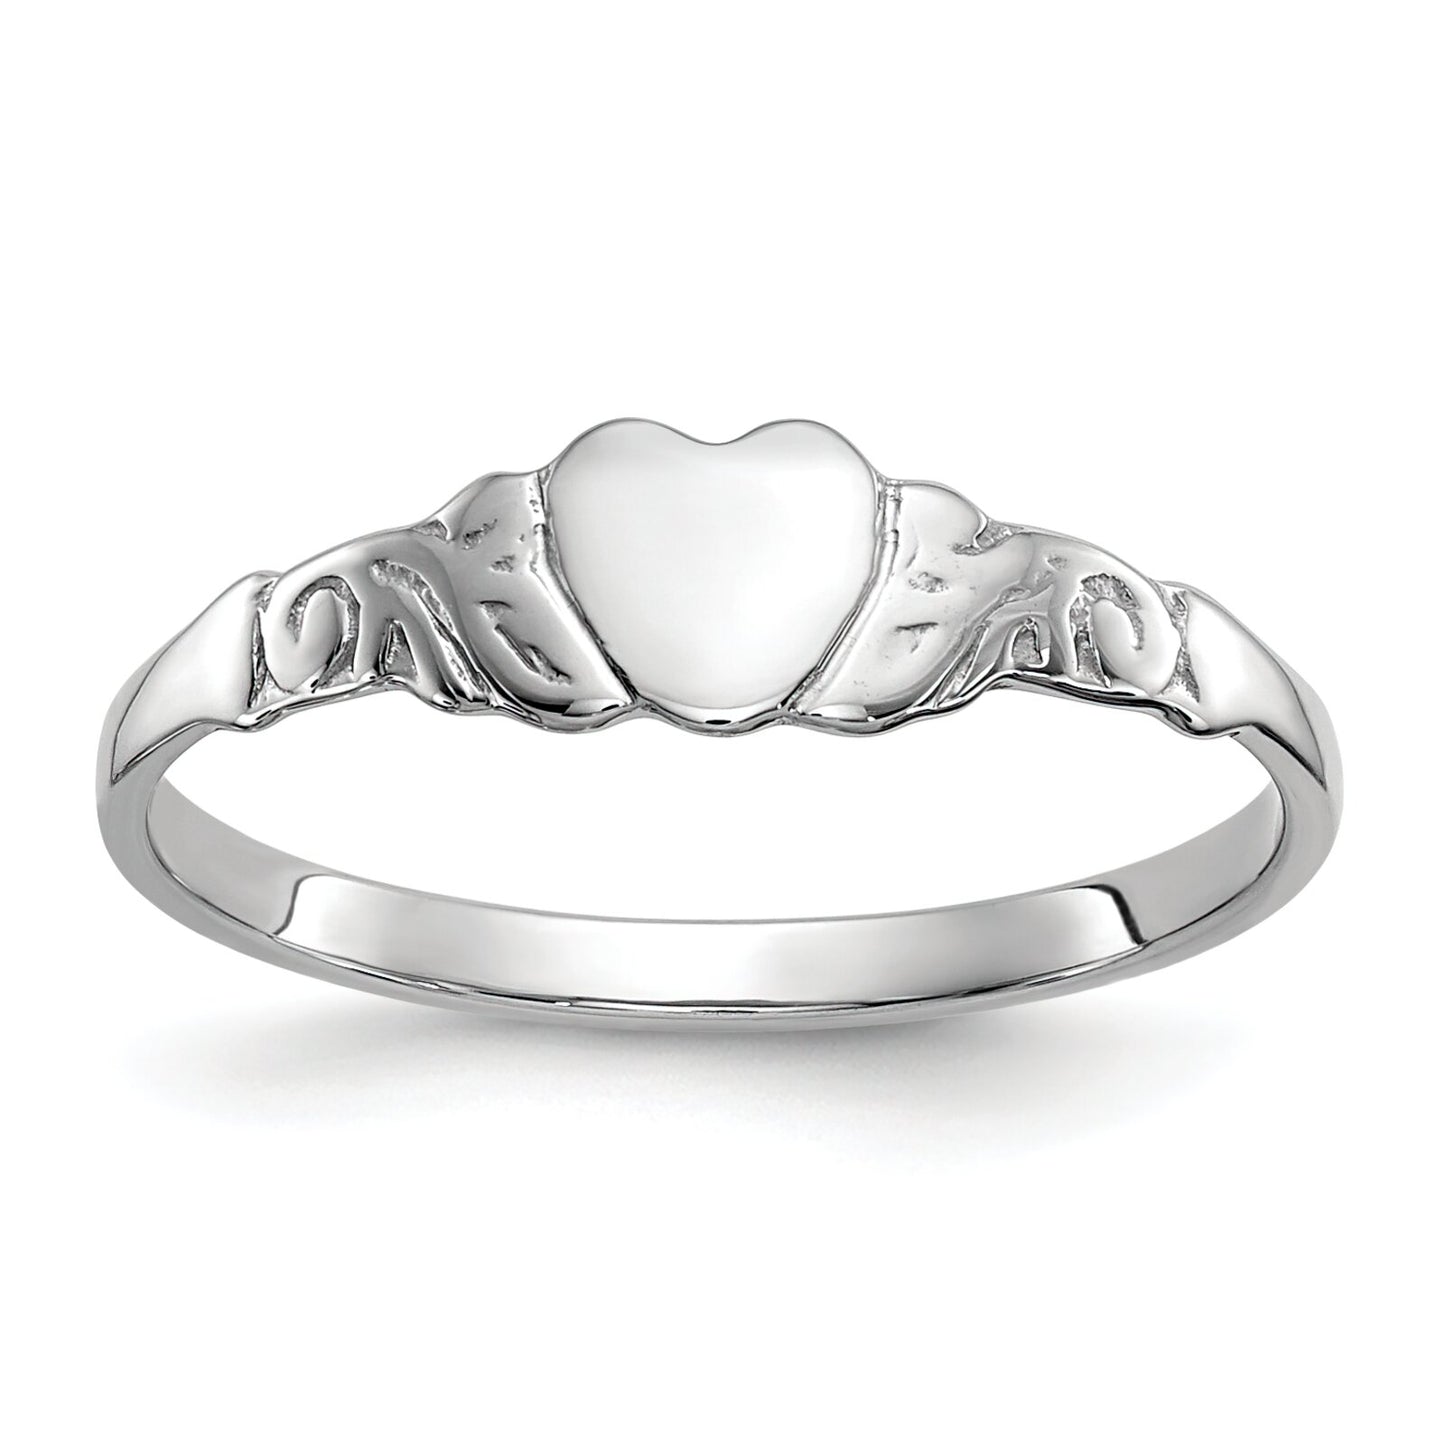 10K White Gold Heart Child's Ring Size 4.5